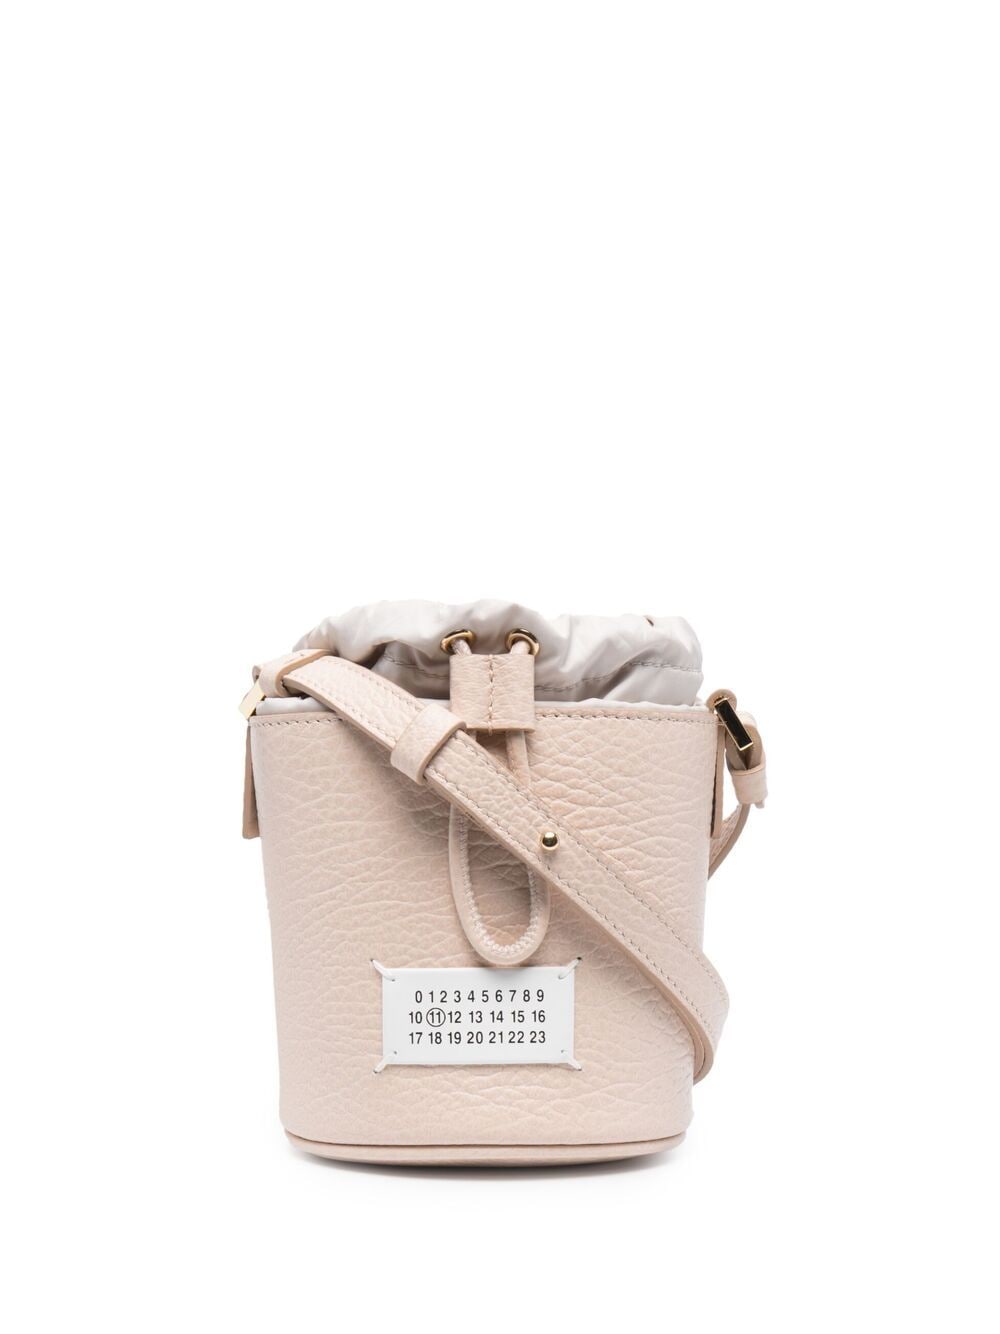 Maison Margiela Neutral 5ac Leather Mini Bucket Bag In Nude